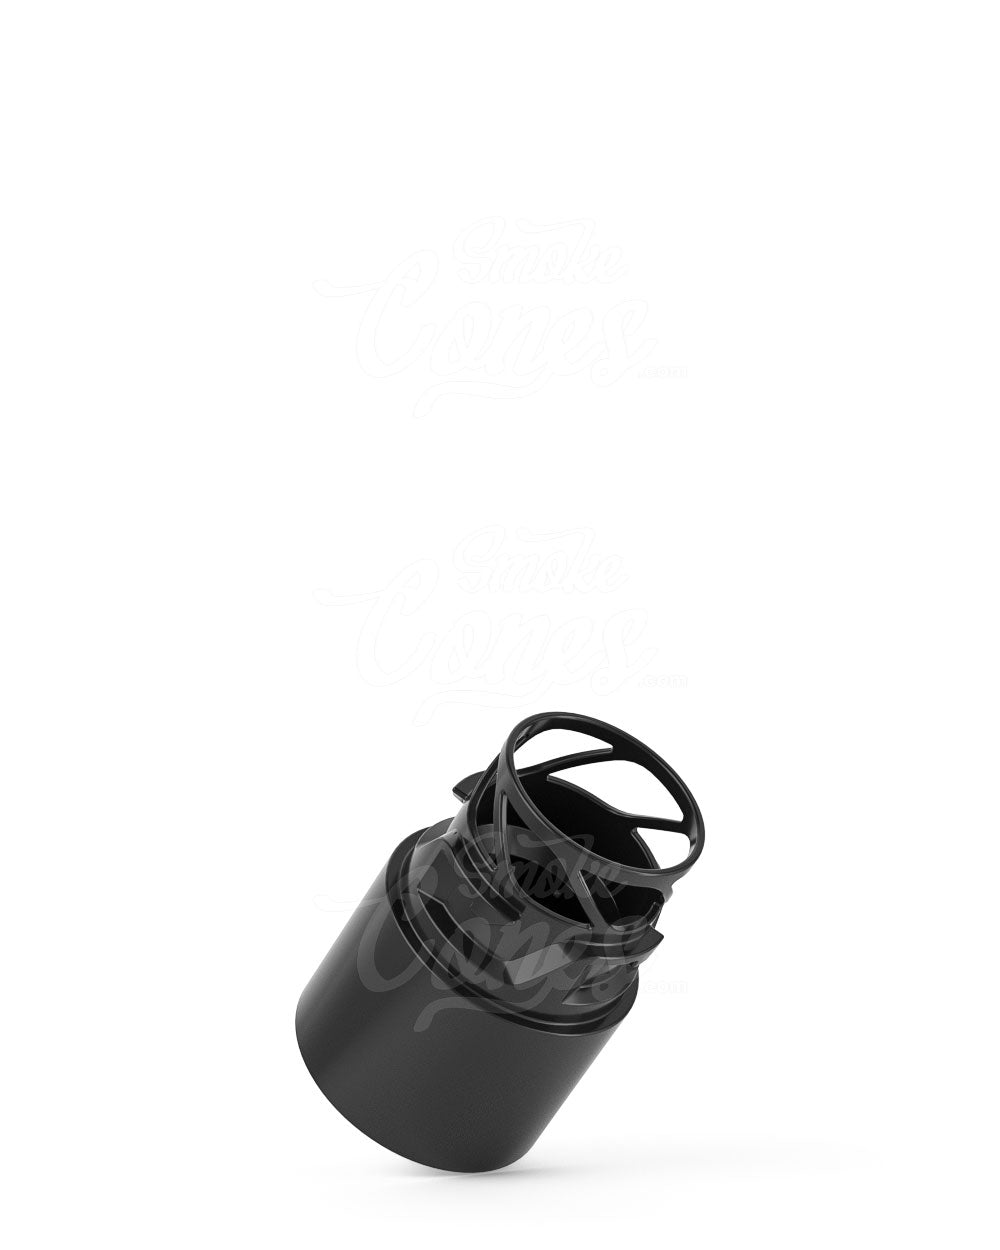 84mm Pollen Gear KAPSŪLA Child Resistant Vape Cartridge Tube Base - Black - 1450/Box